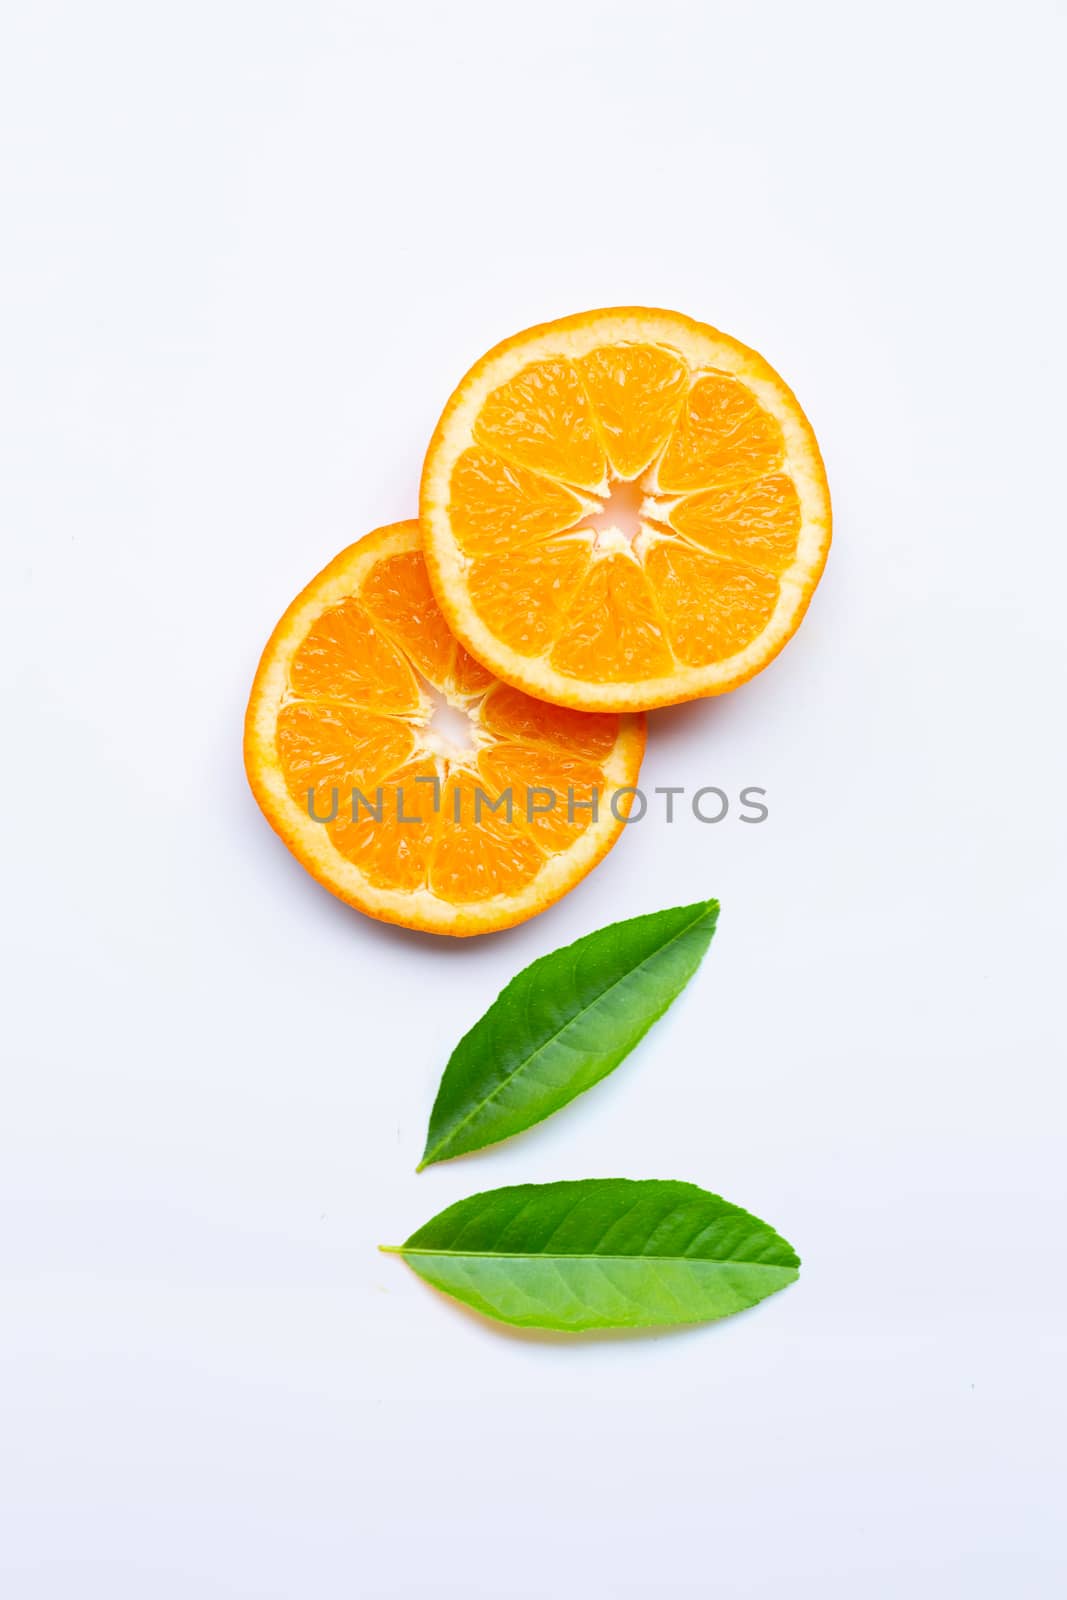 Fresh orange citrus fruits  on white.   by Bowonpat